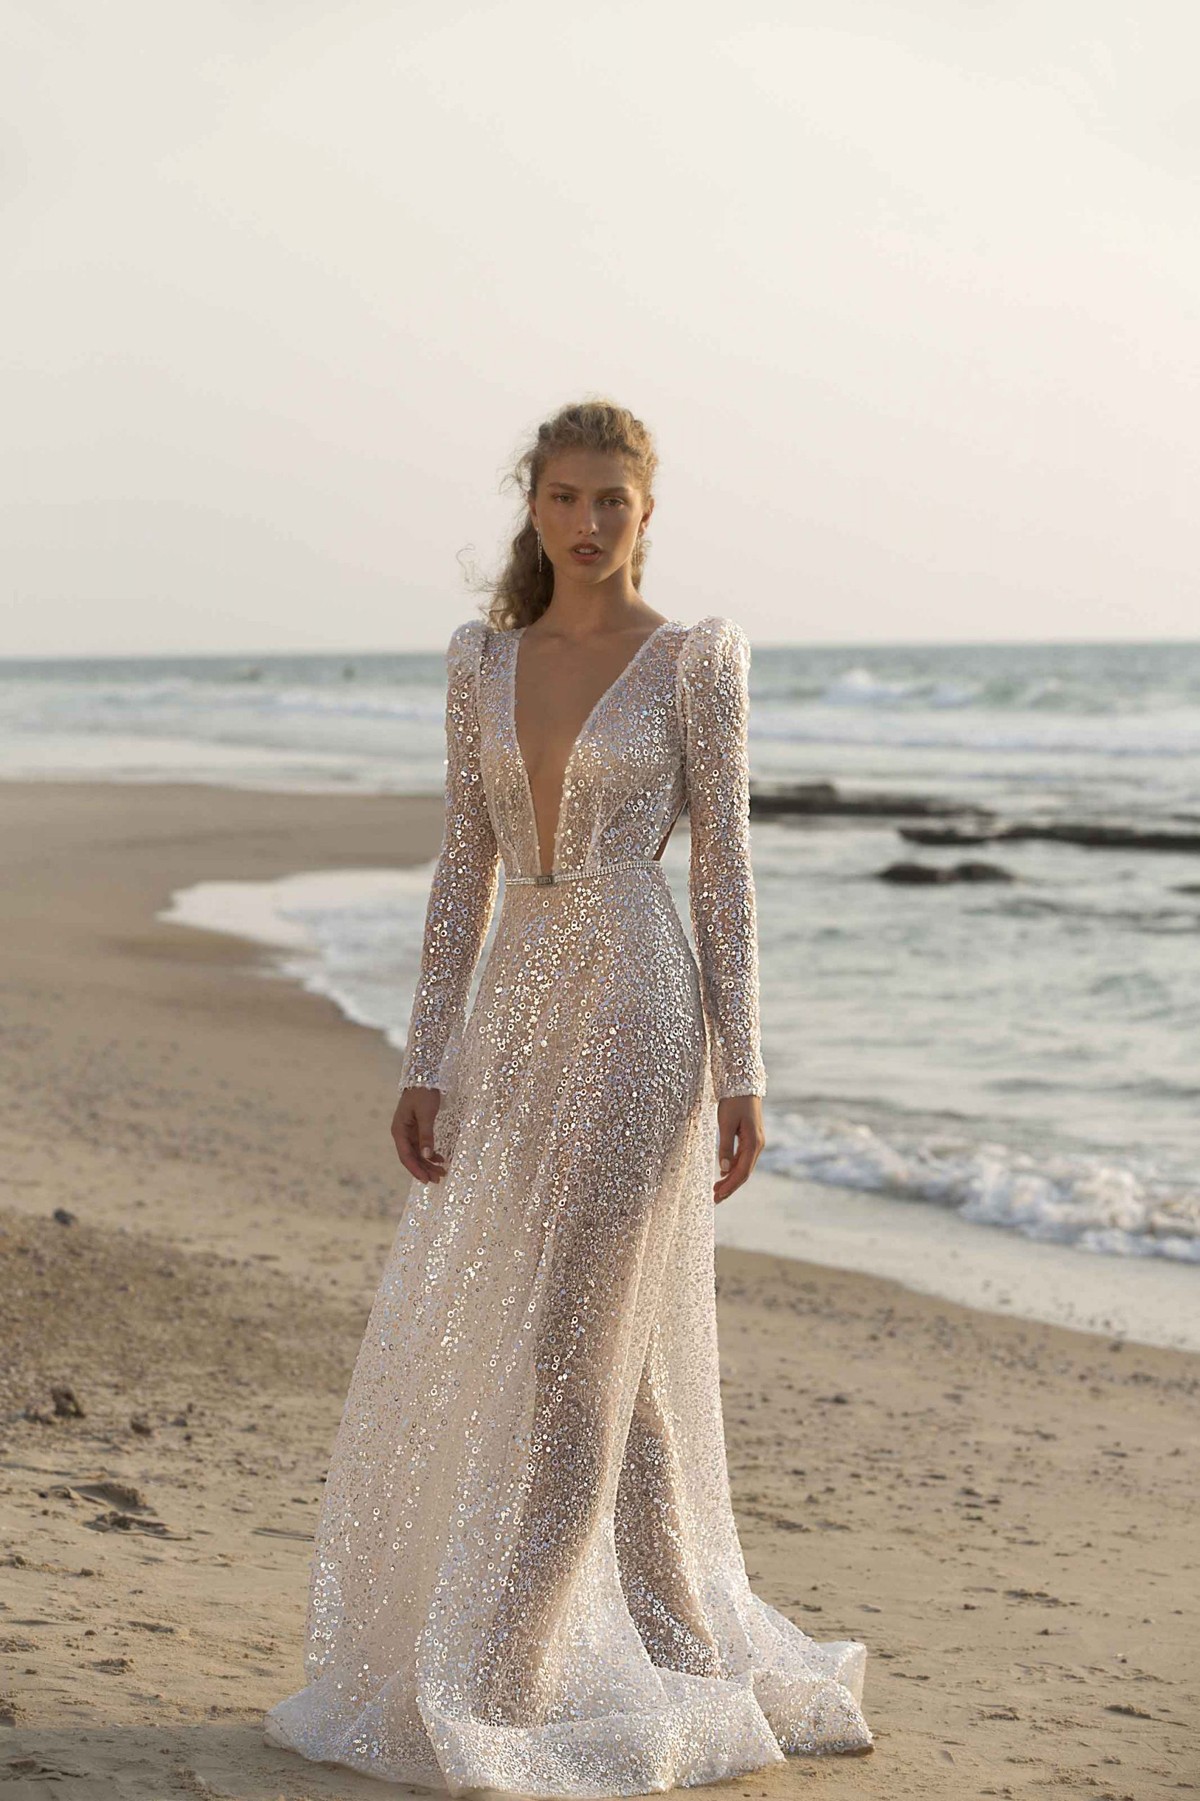 21-HELGA Bridal Dress Inspirated By Berta Muse 2021 Vista Mare Collection